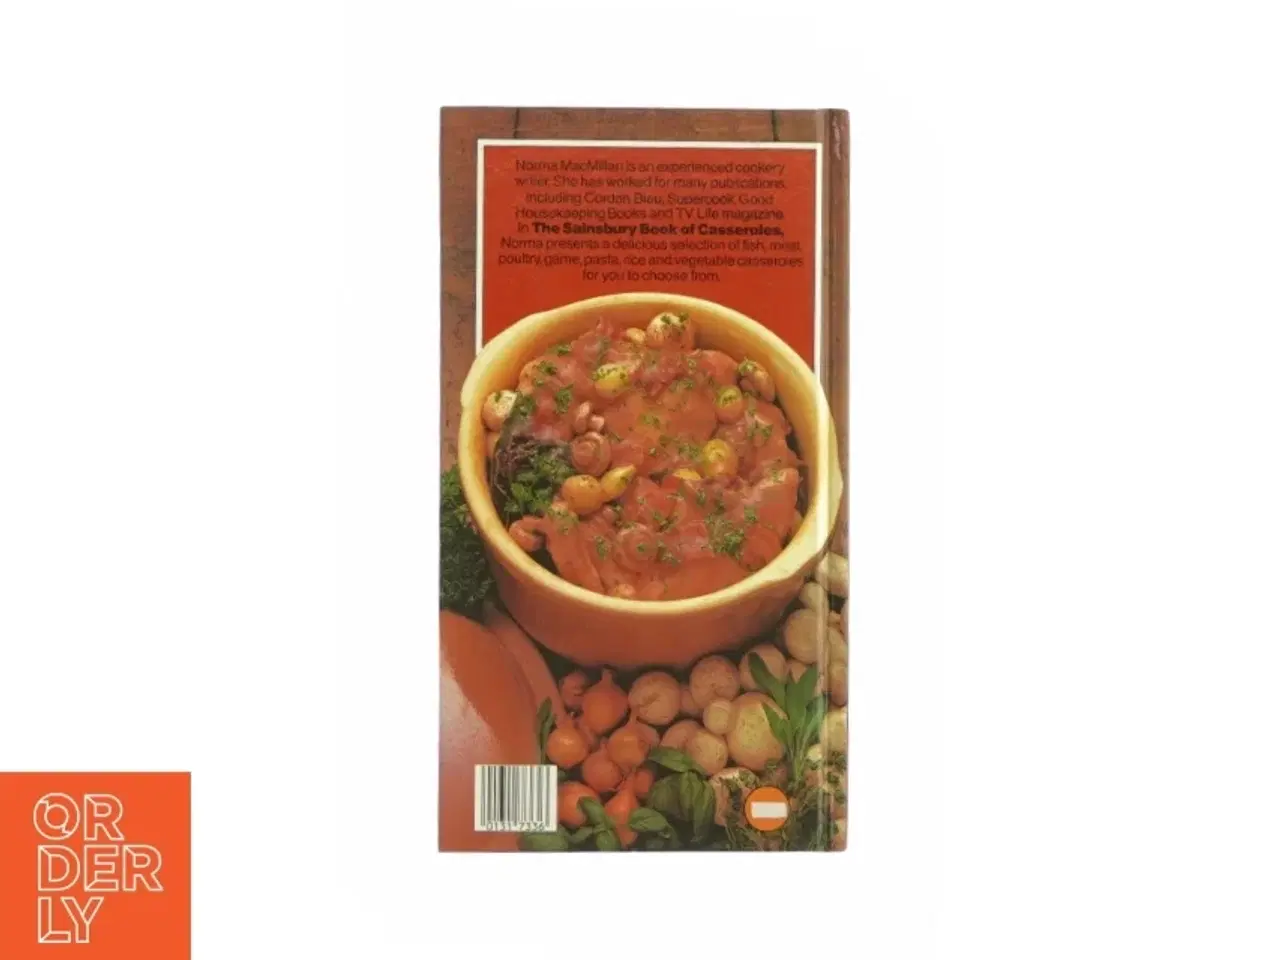 Billede 2 - The Sainsbury book of casseroles af Norma MacMillan (Bog)